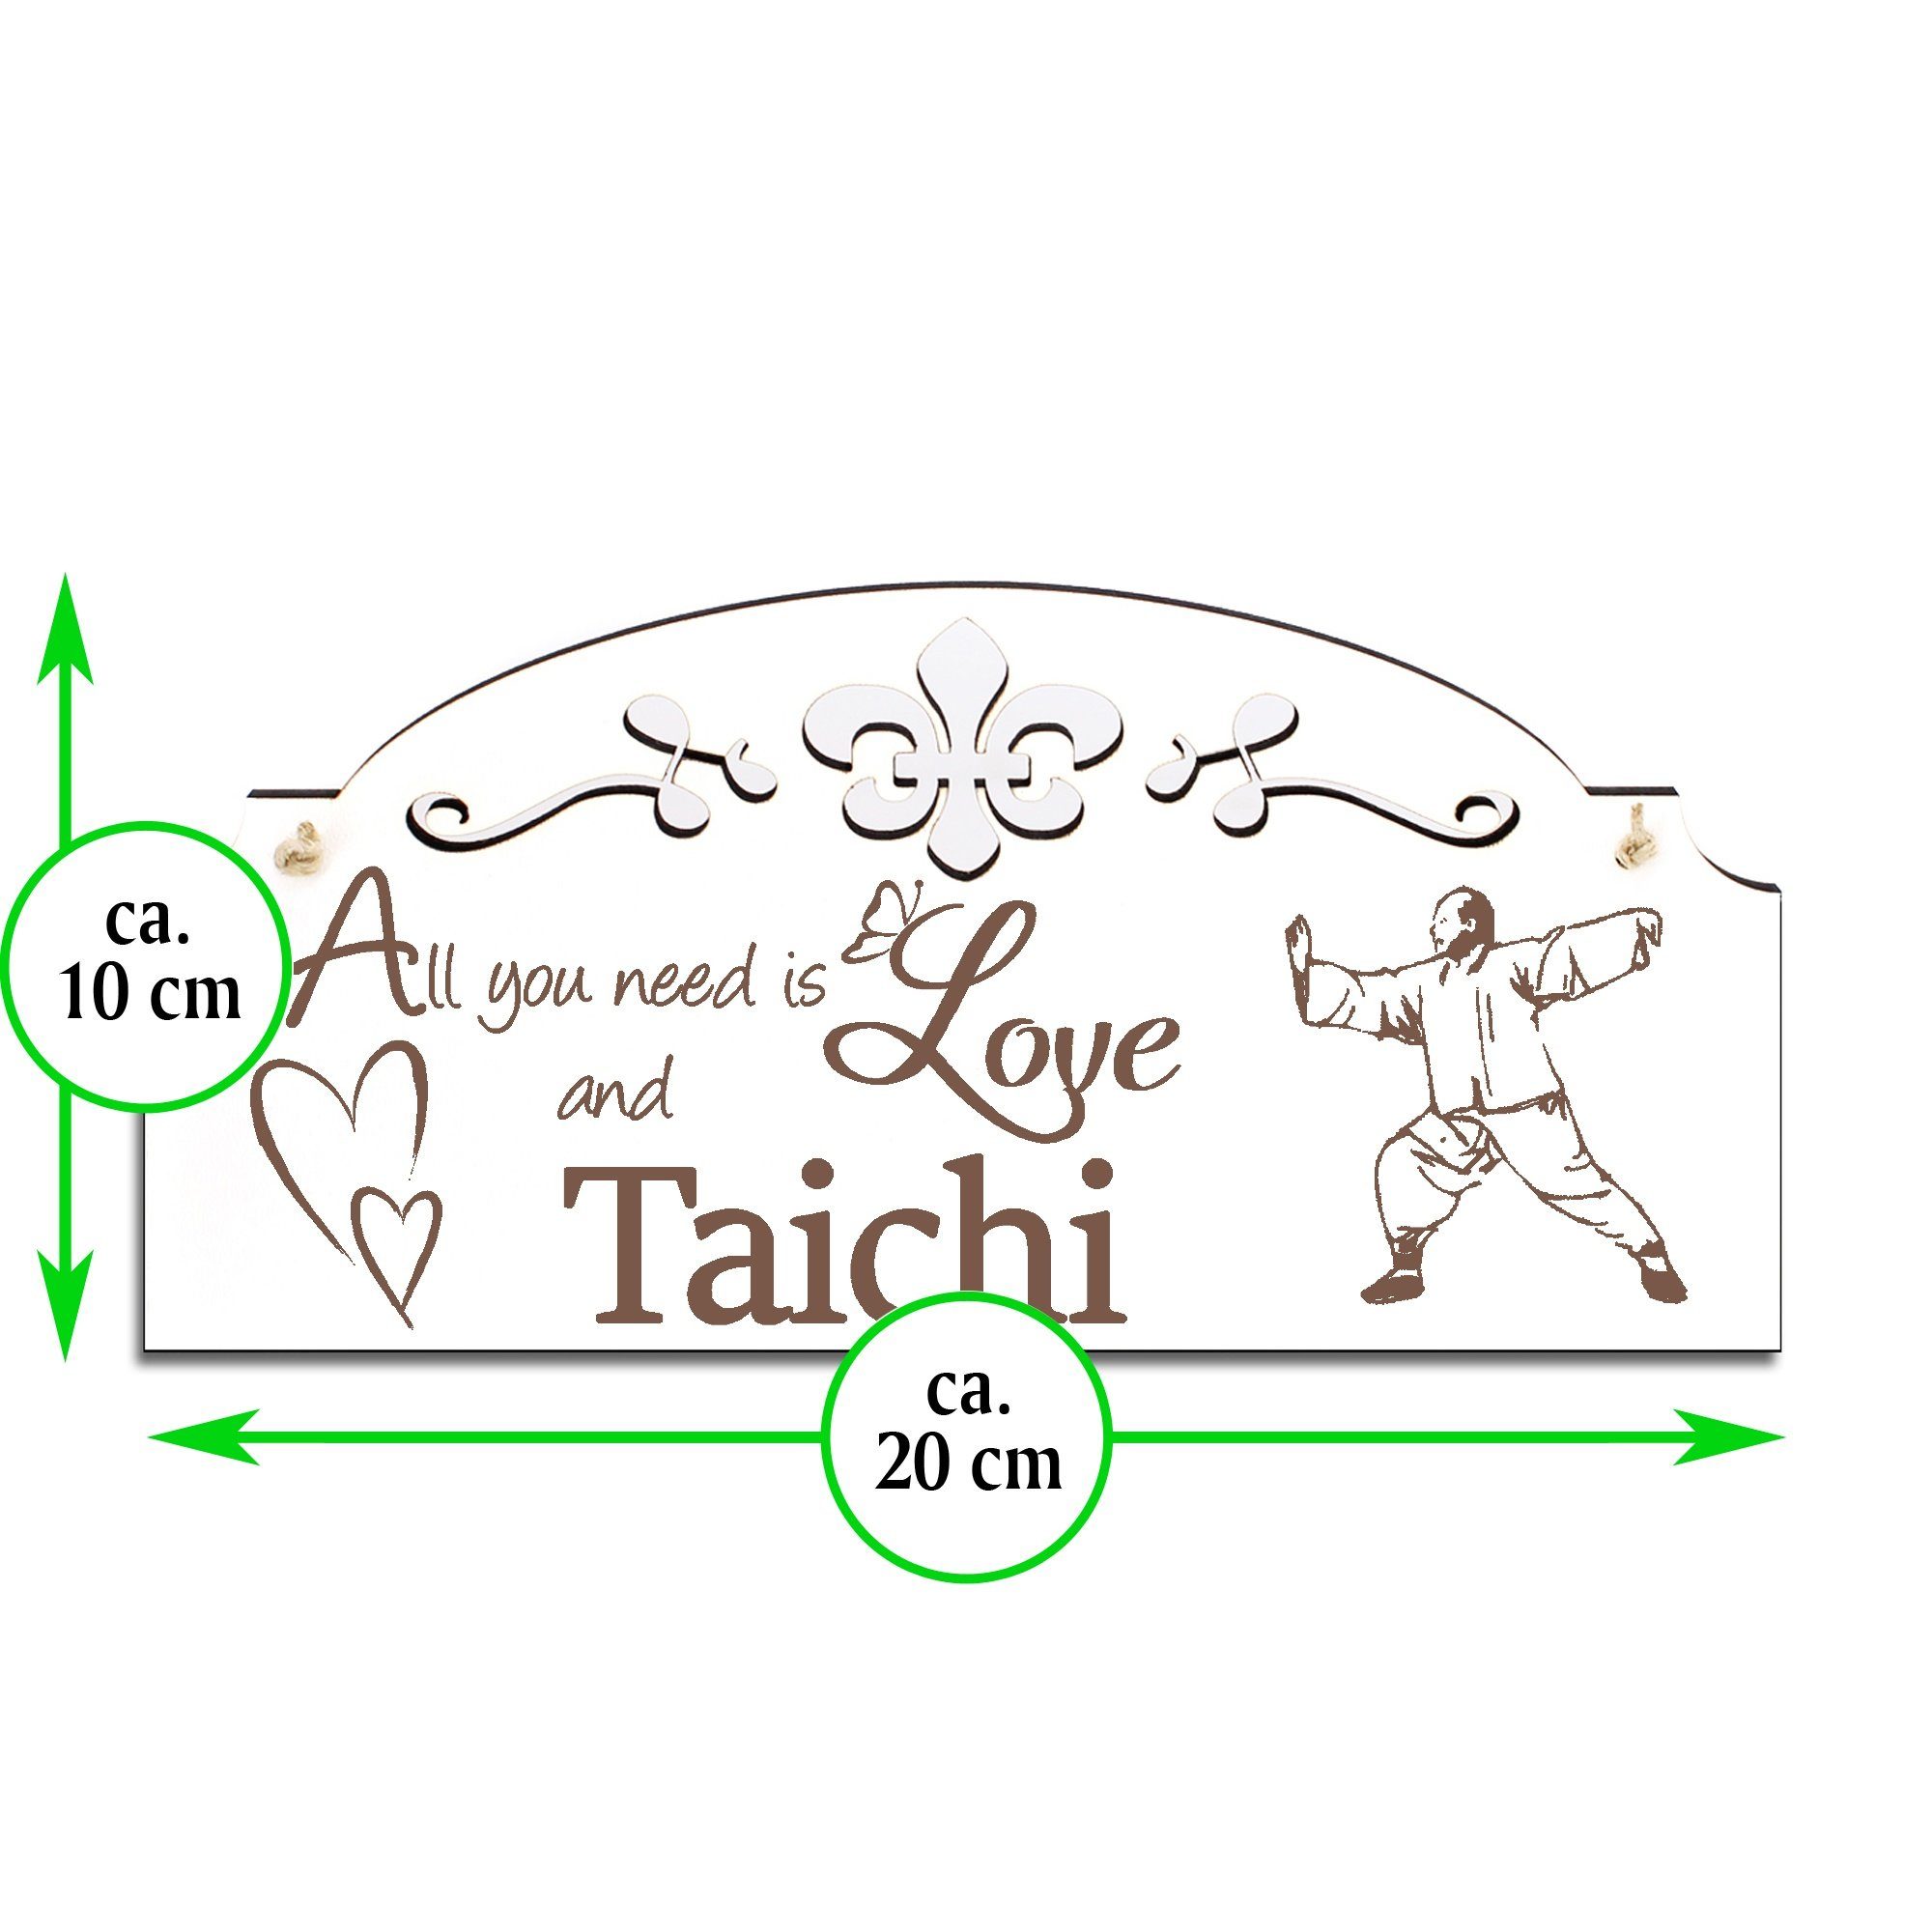 Deko you Love All Taichi is Hängedekoration Dekolando need 20x10cm